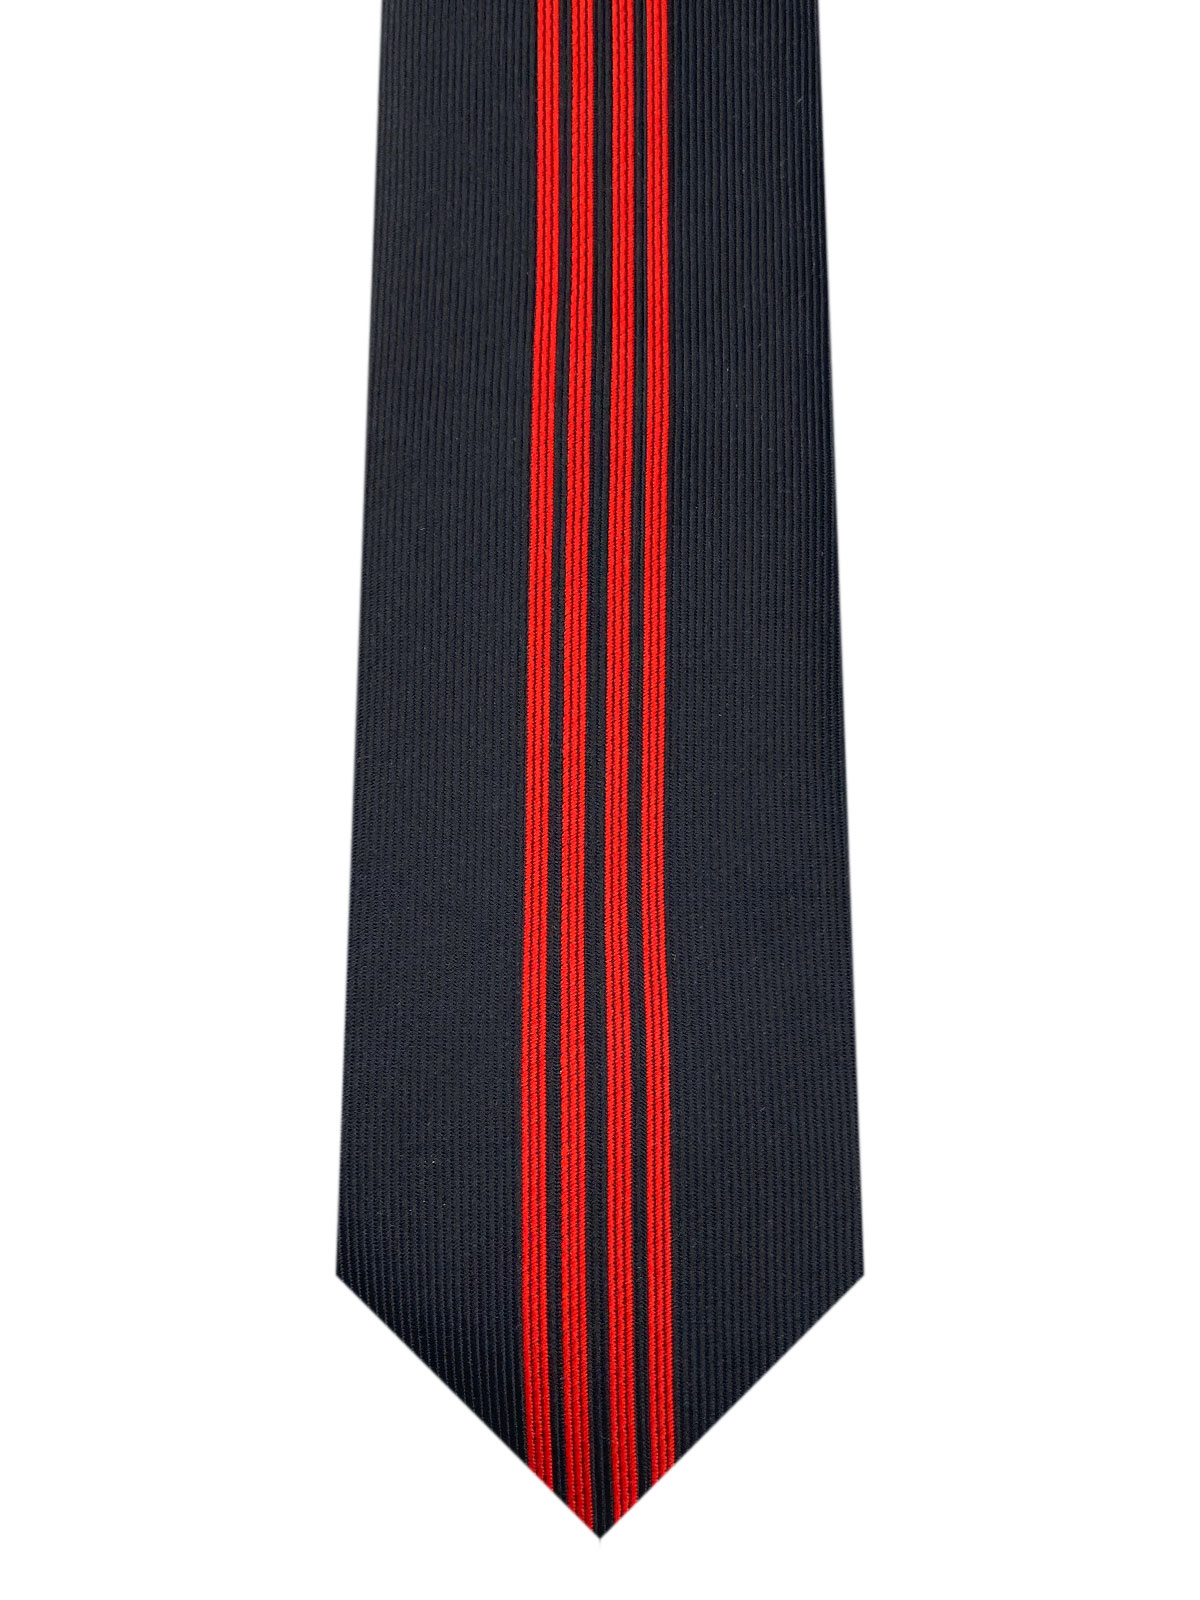 Red striped jacquard tie - 10205 - € 14.06 img2